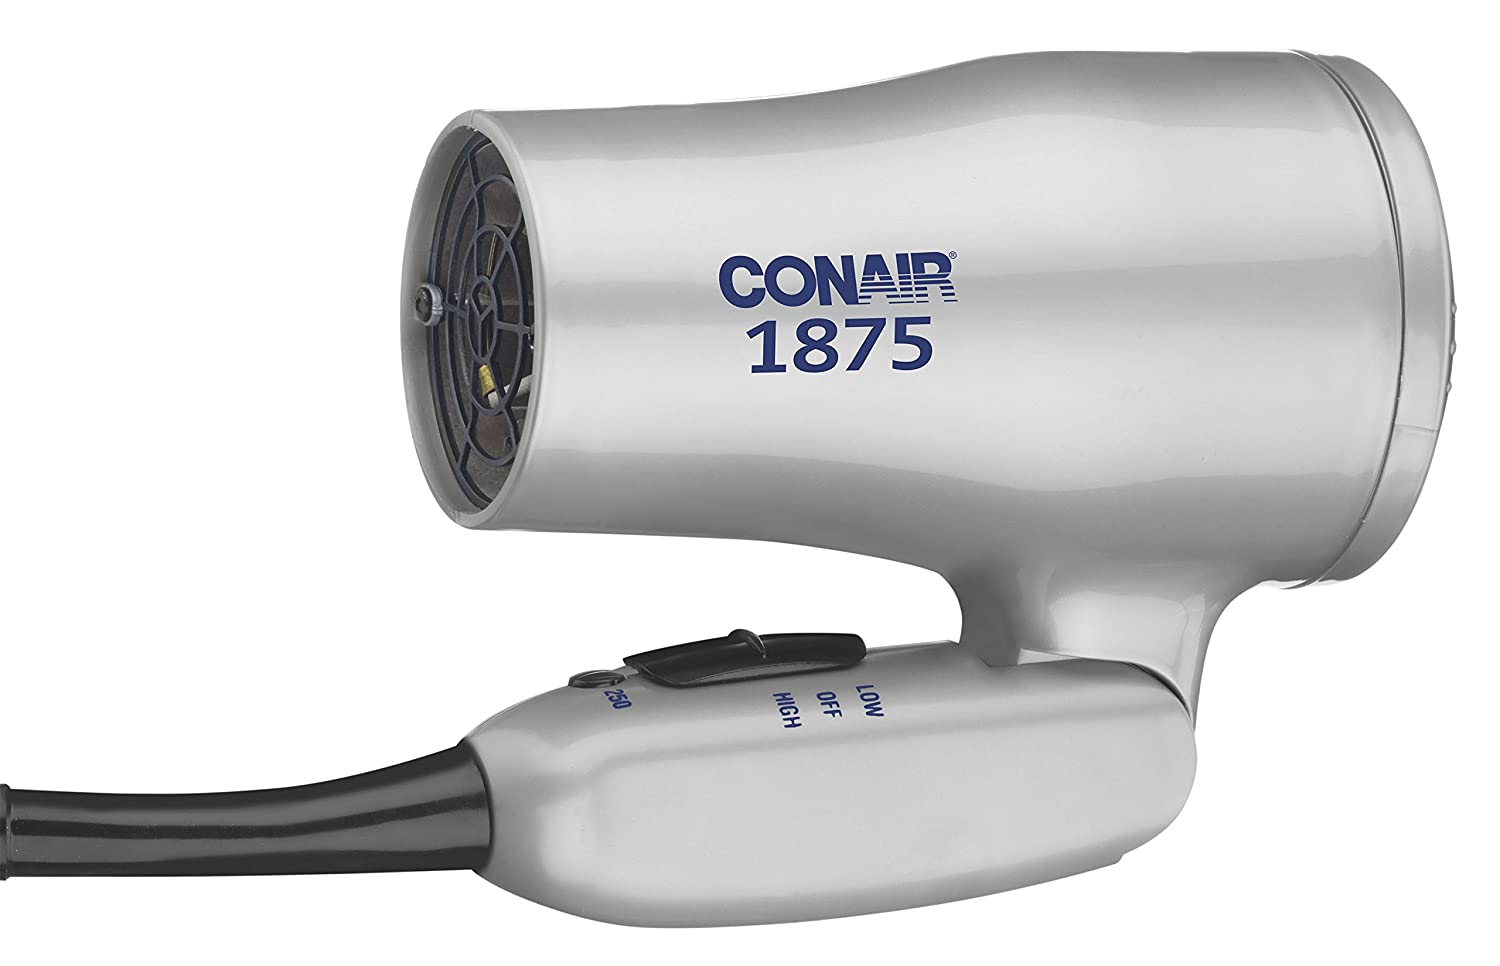 Conair 1875 Watt Compact Hair Dryer